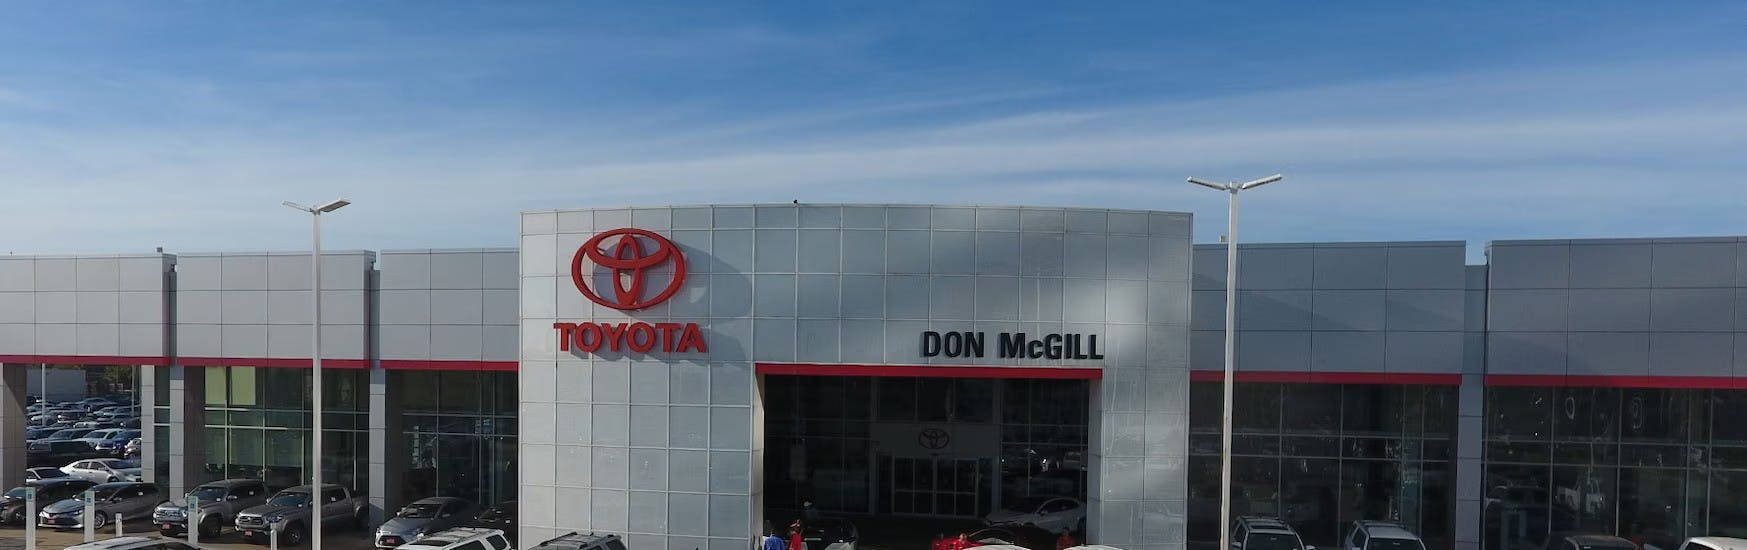 Don McGill front exterior shot